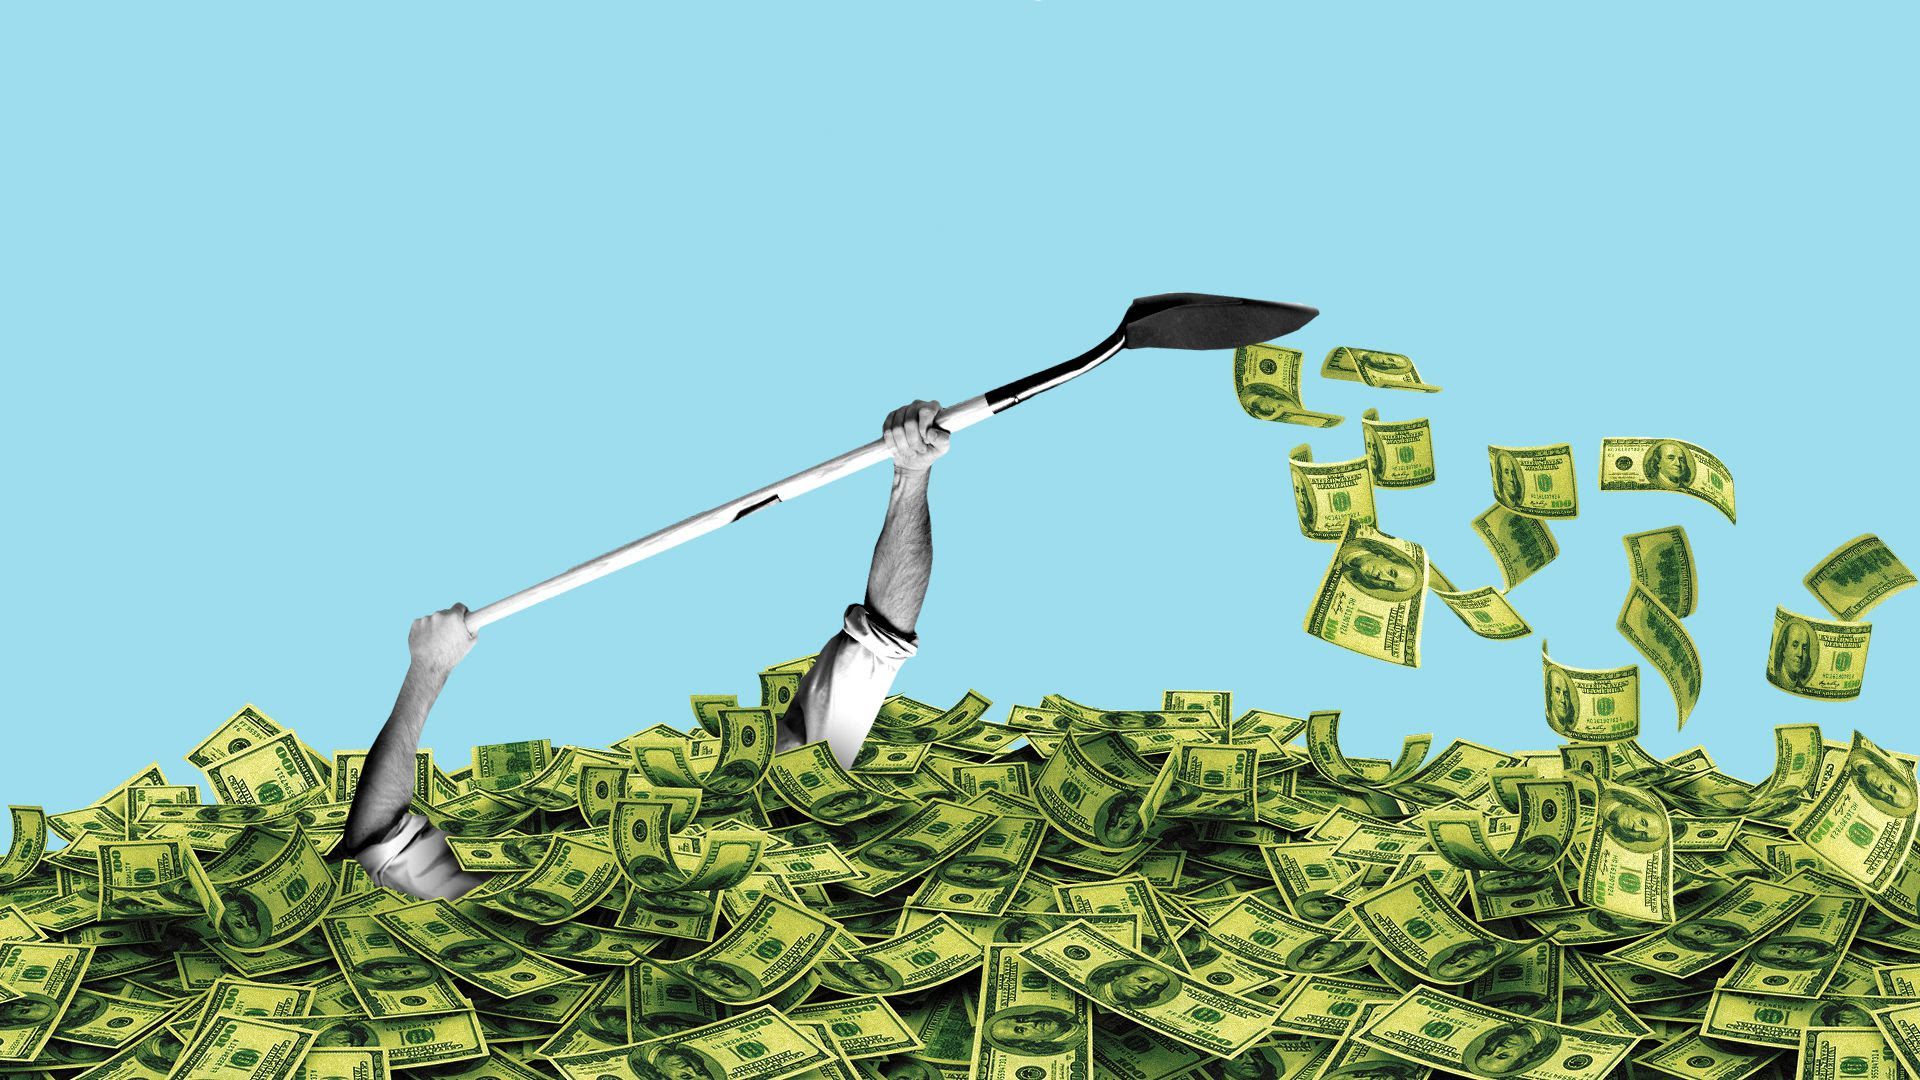 An illustration of someone shoveling cash